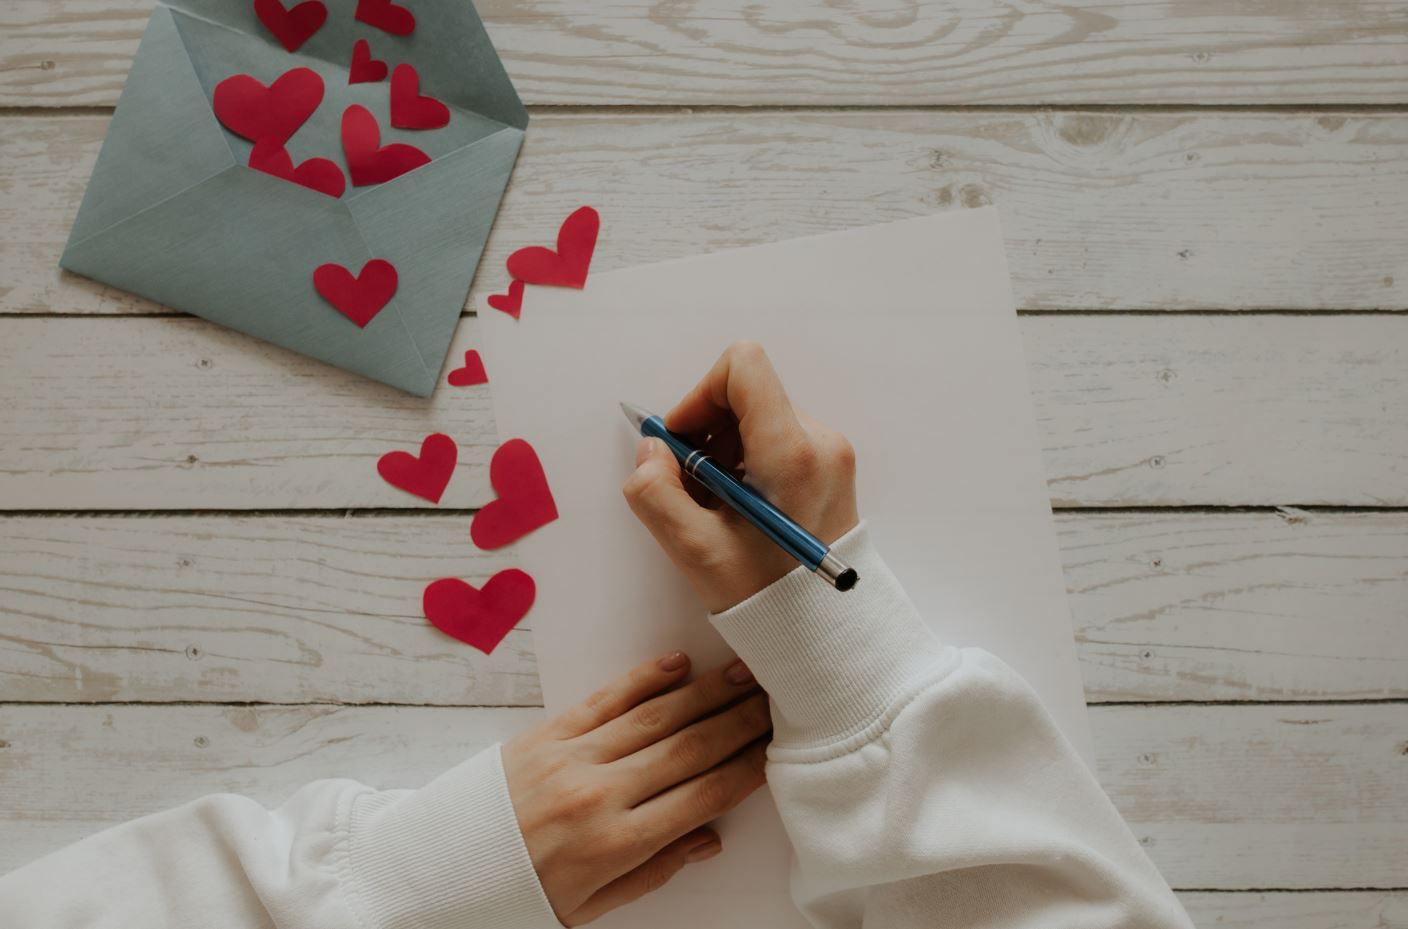 Make It Personal: Send Handwritten Love